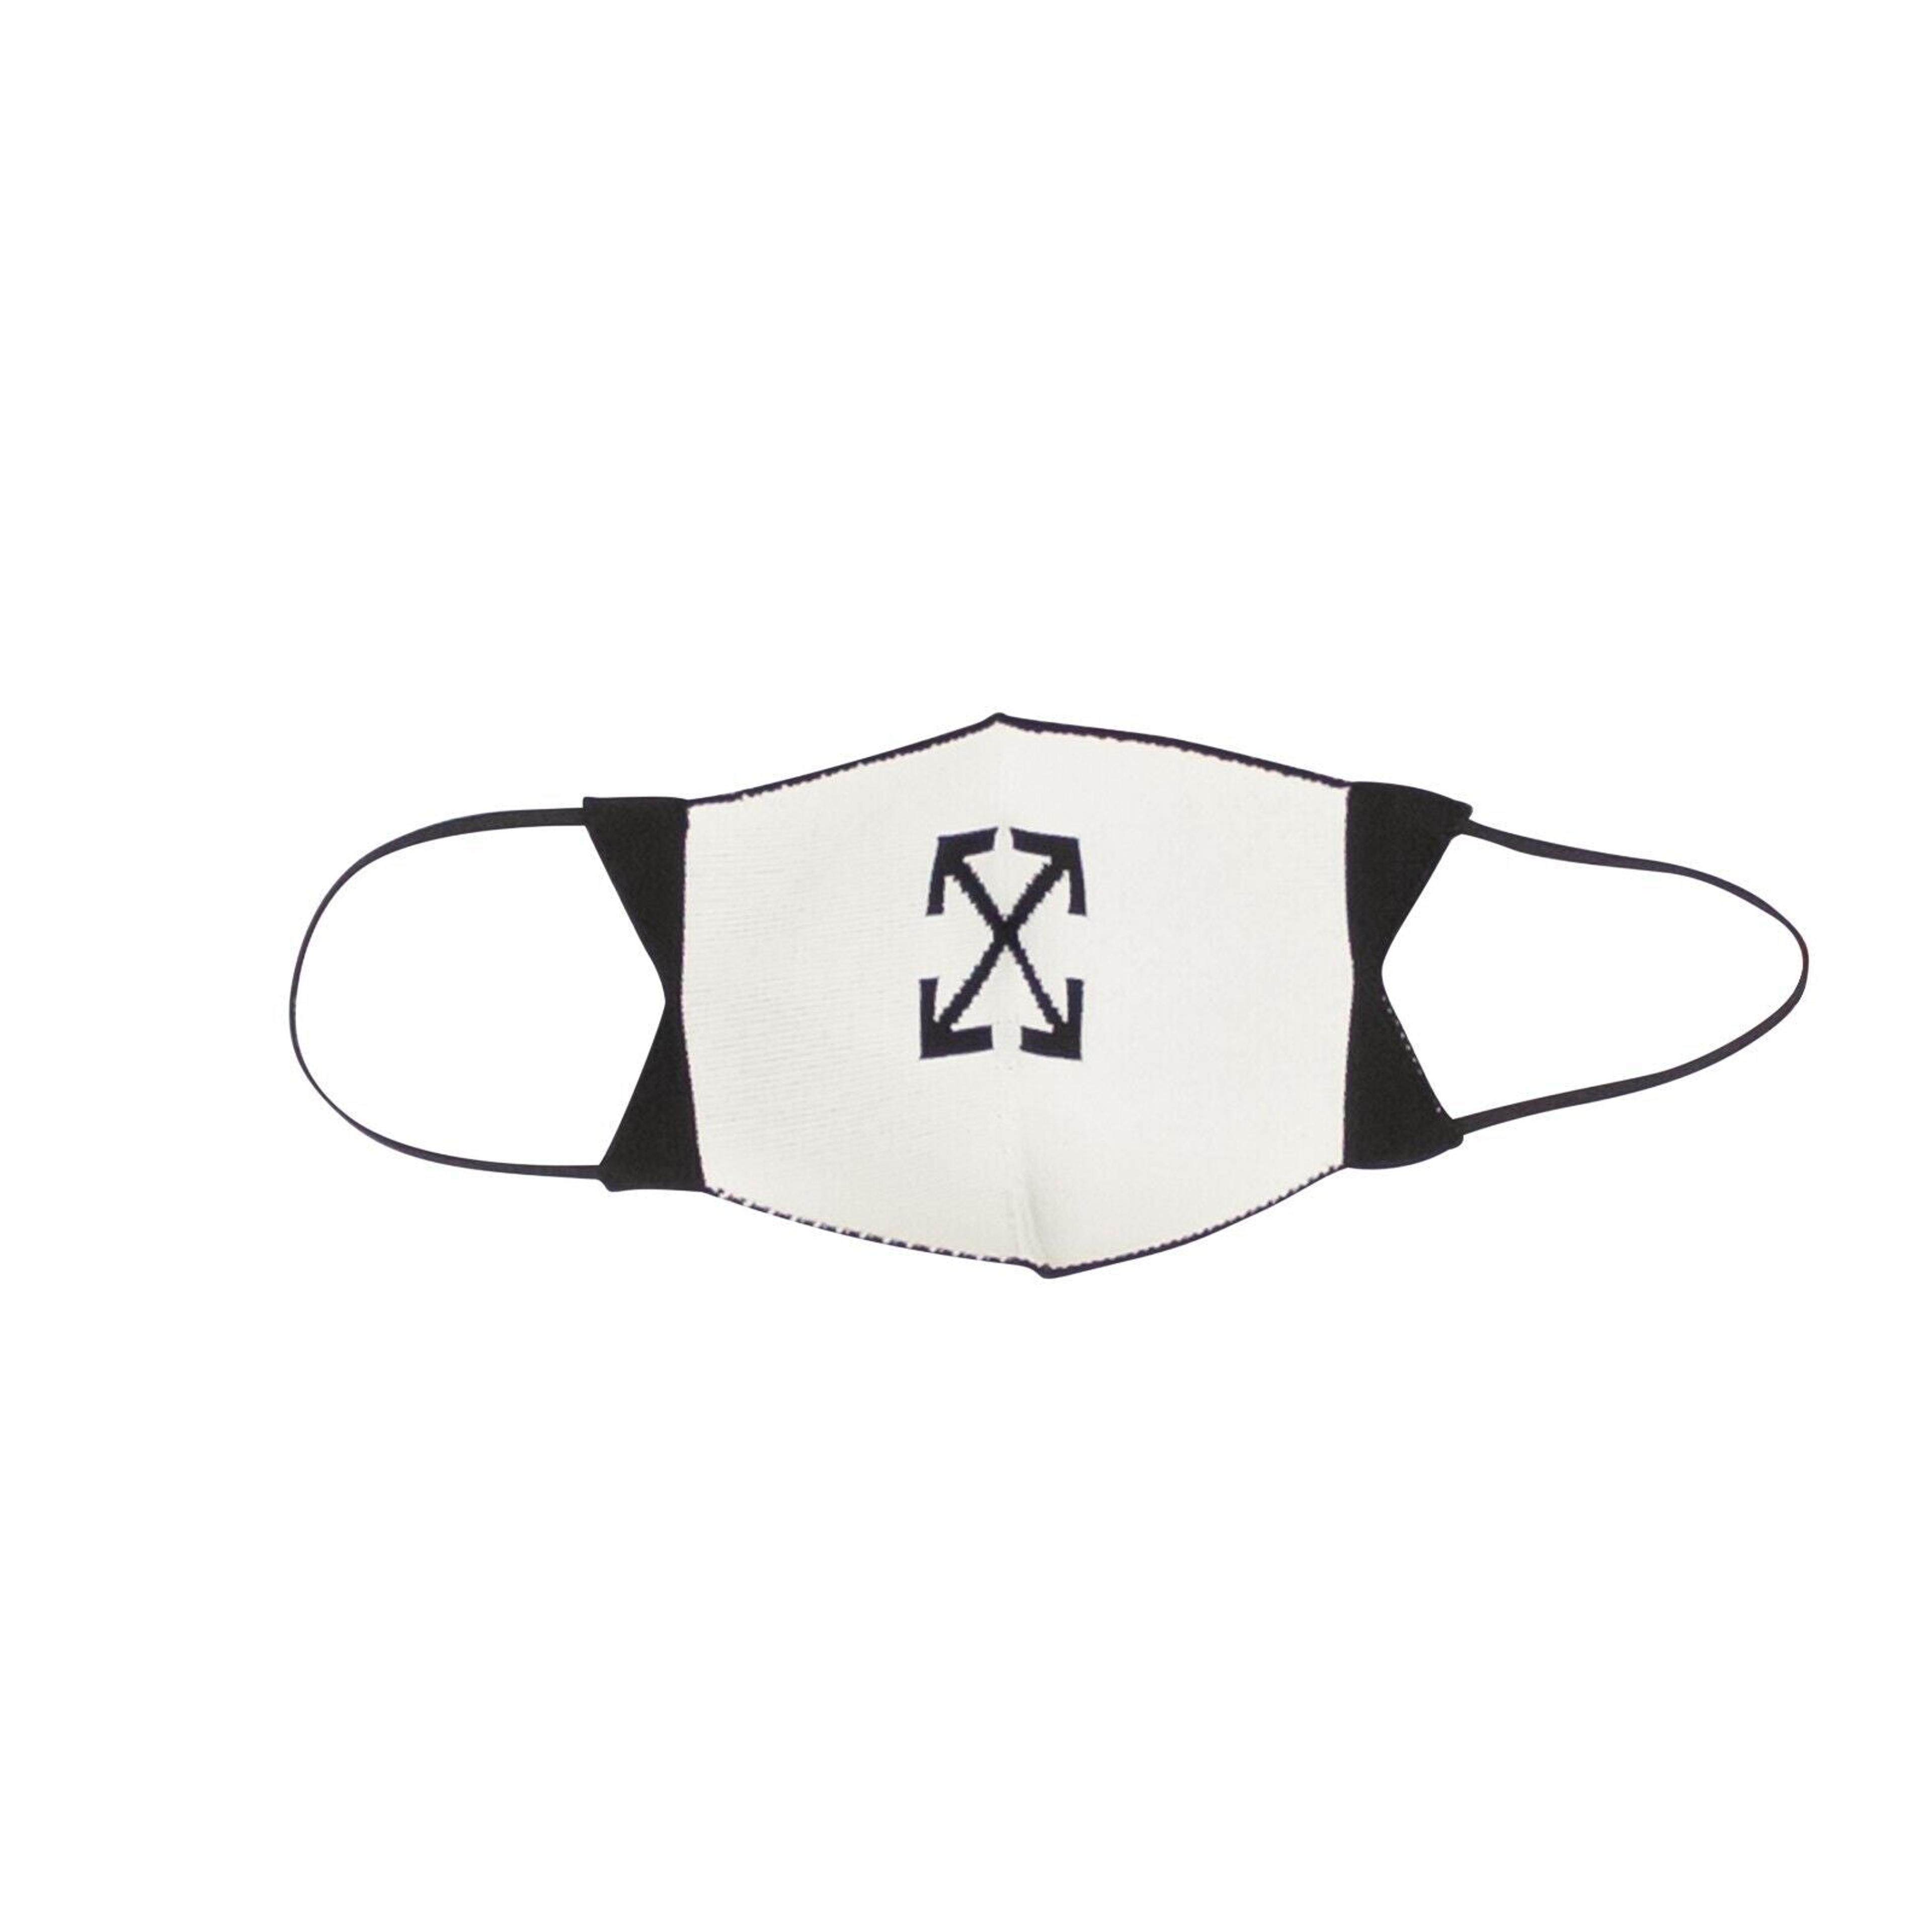 Alternate View 1 of Off-White C/O Virgil Abloh Arrow Knit Simple Mask - Black/White